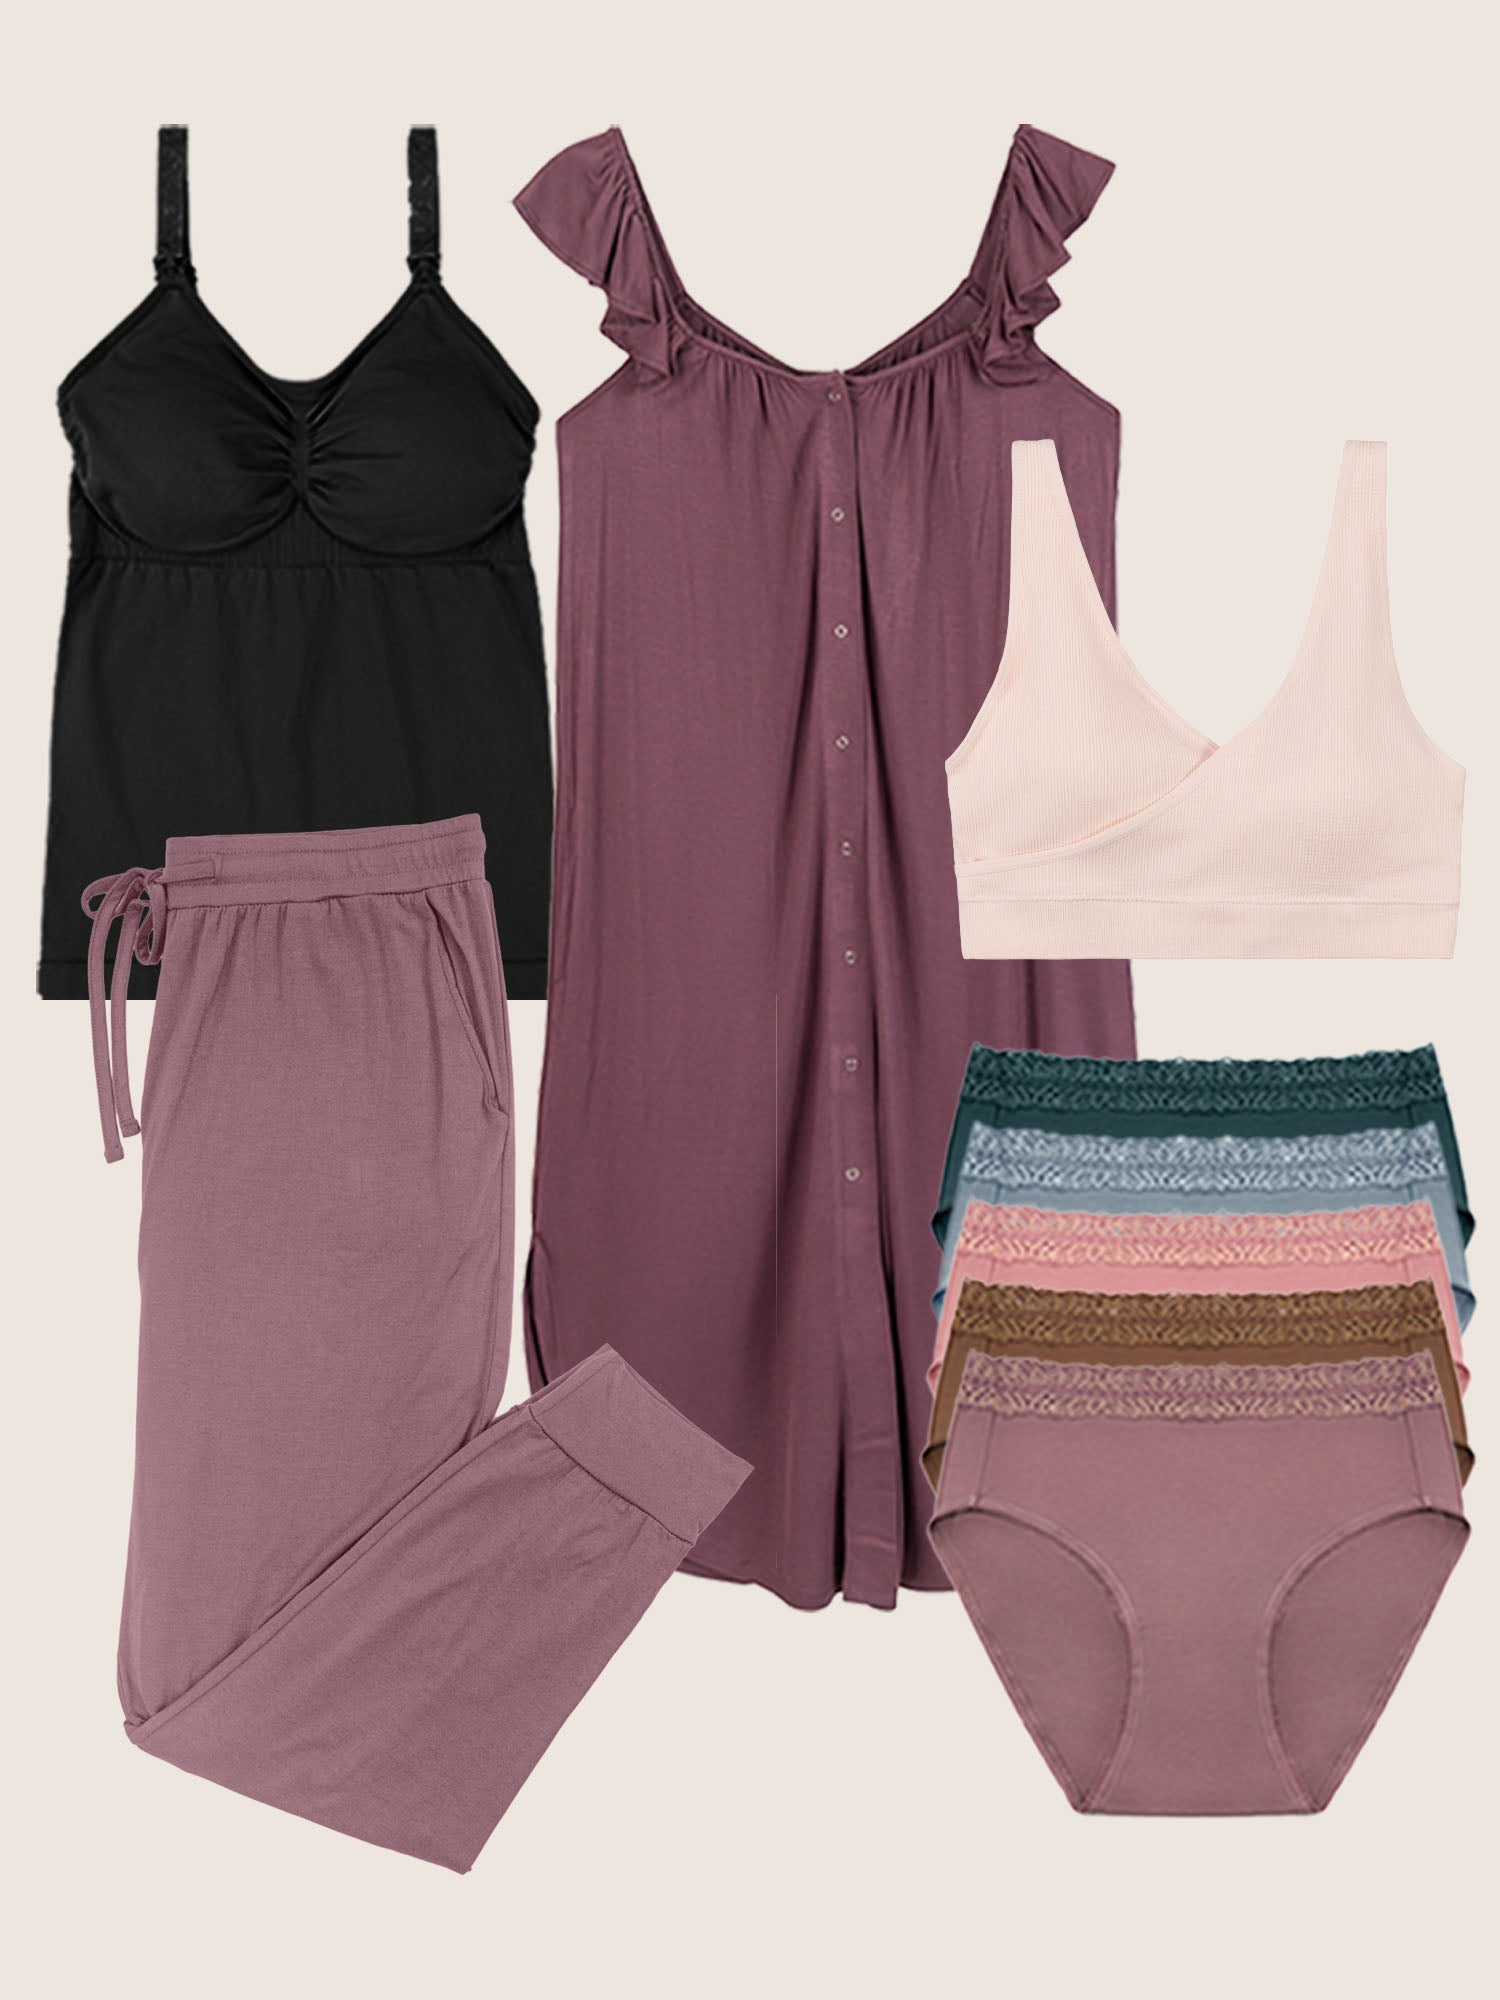 SOLD OUT! SALE! Pretty Purple or Pink Plus Size Bra & Underwear